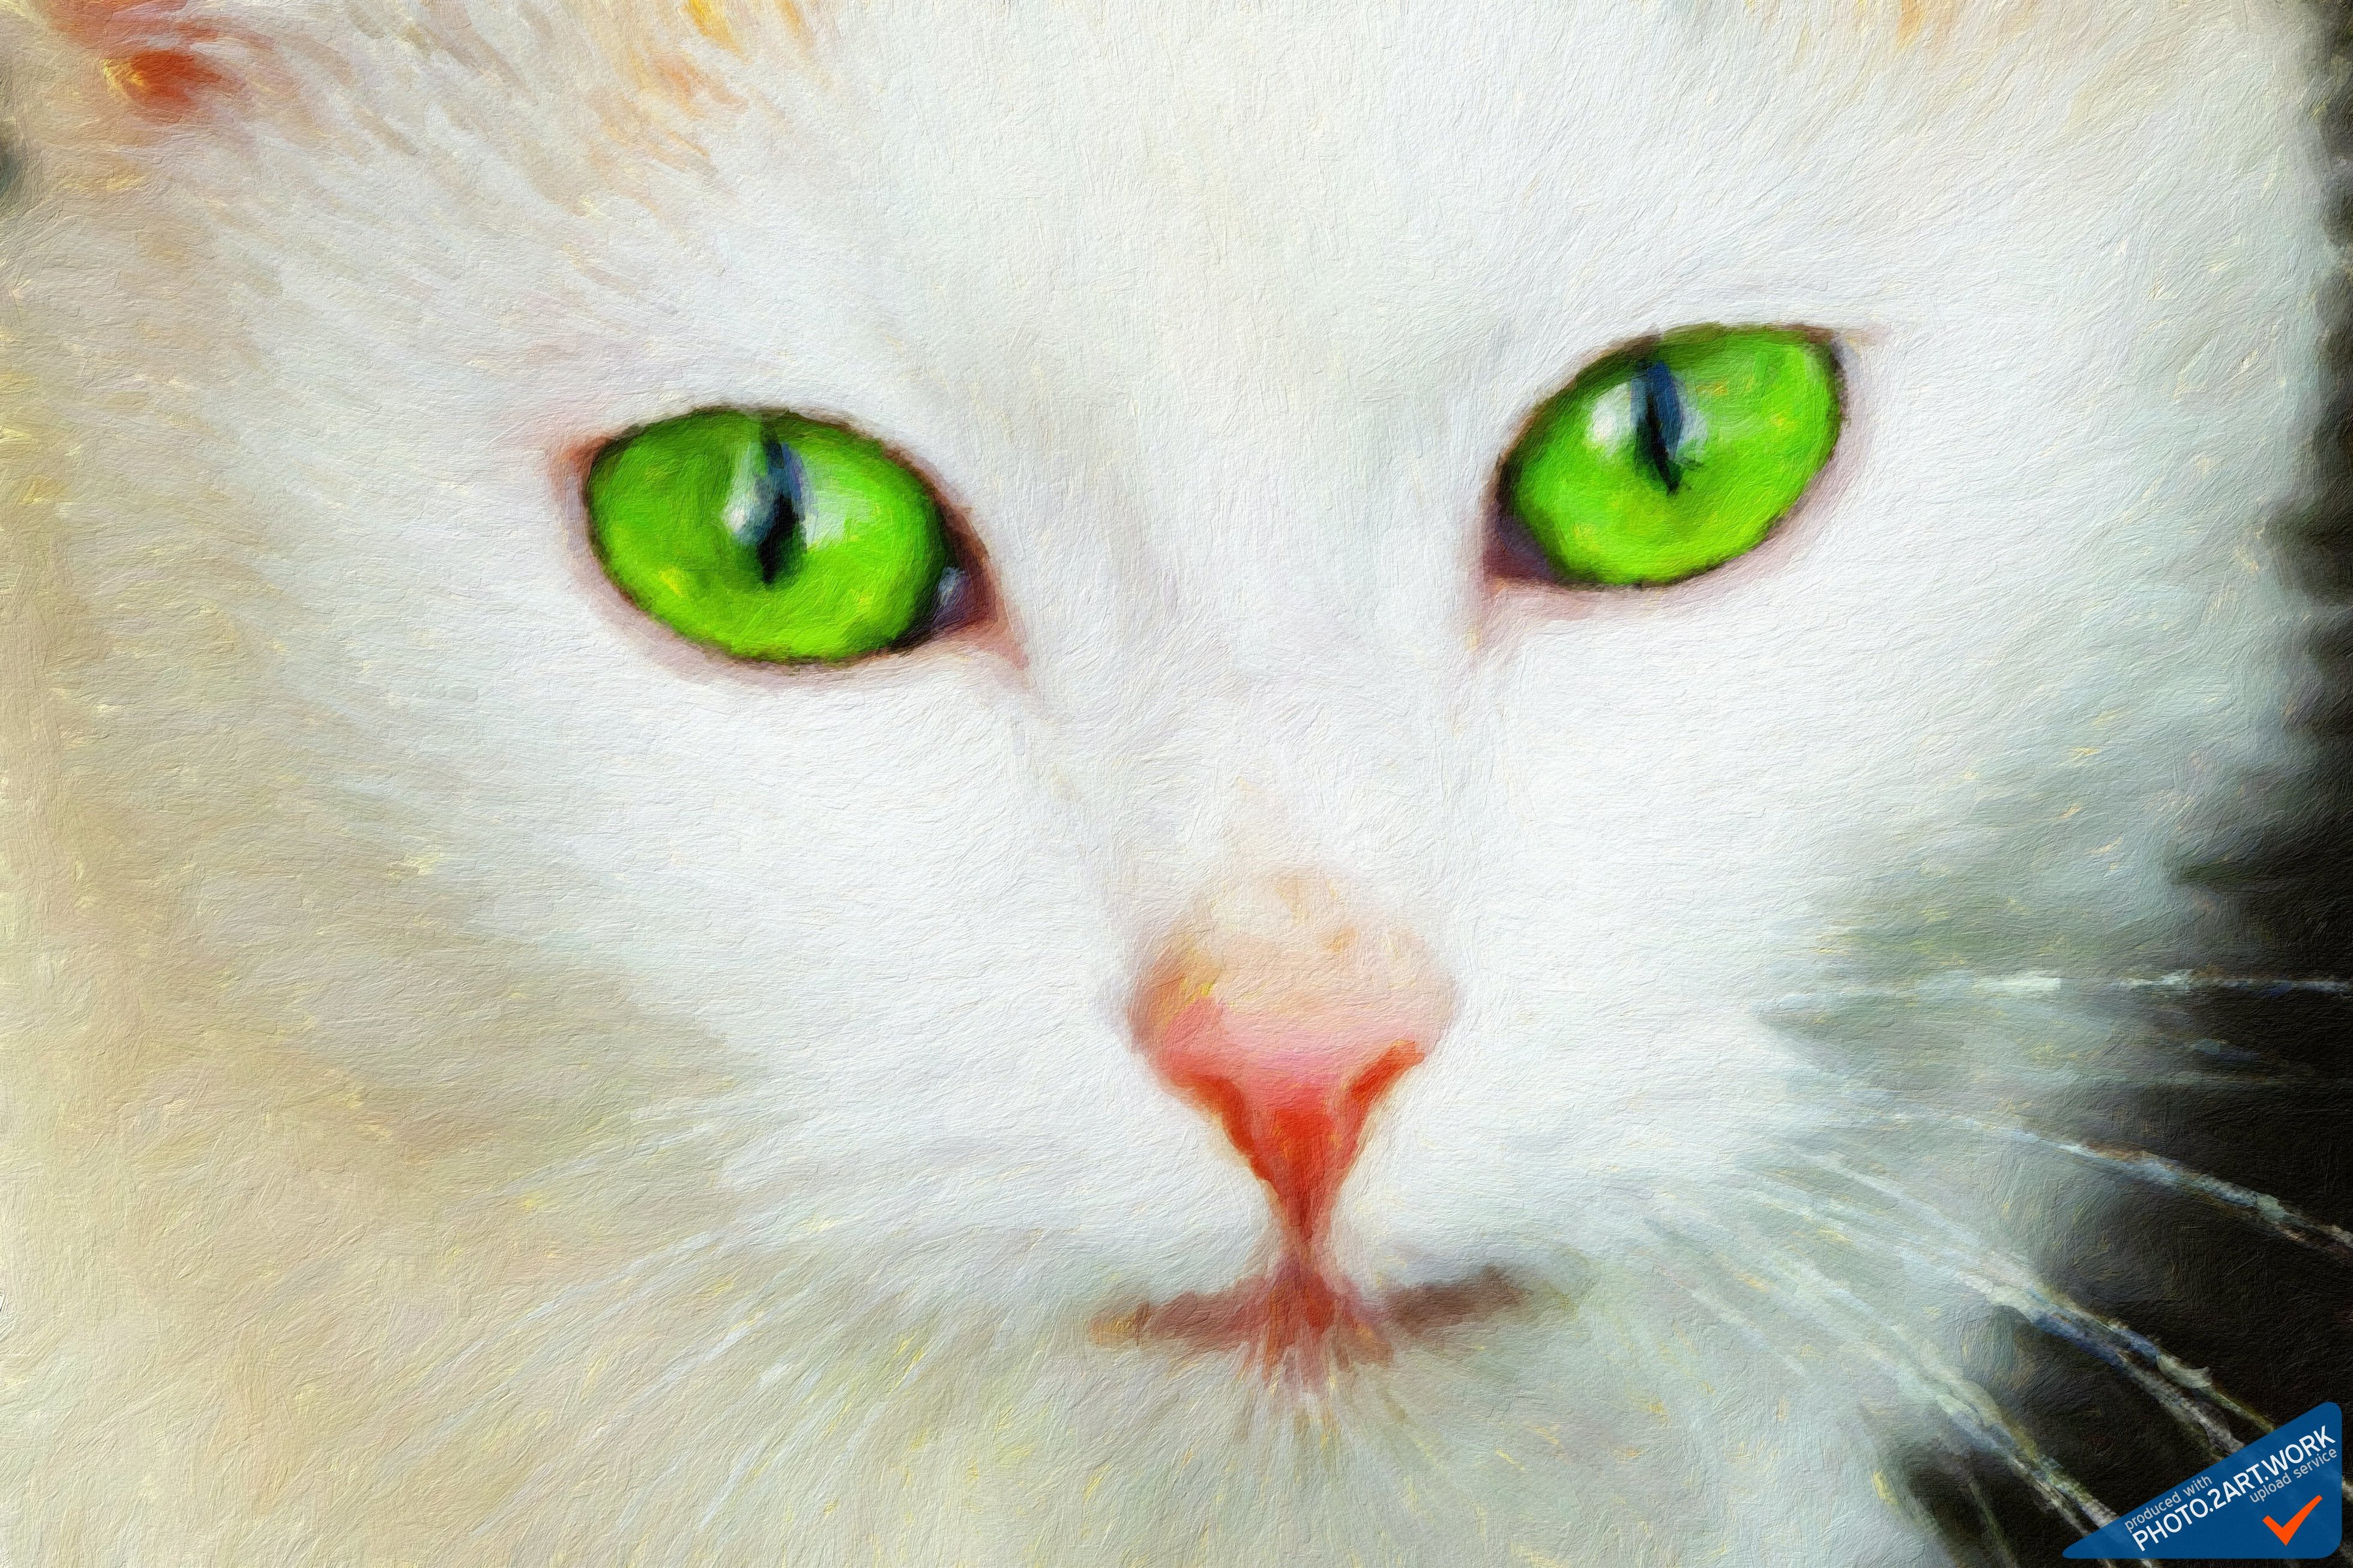 Cat - ID: 16236-105017-7342, 17545, Kitten, Texture, Surreal, HQ Photo